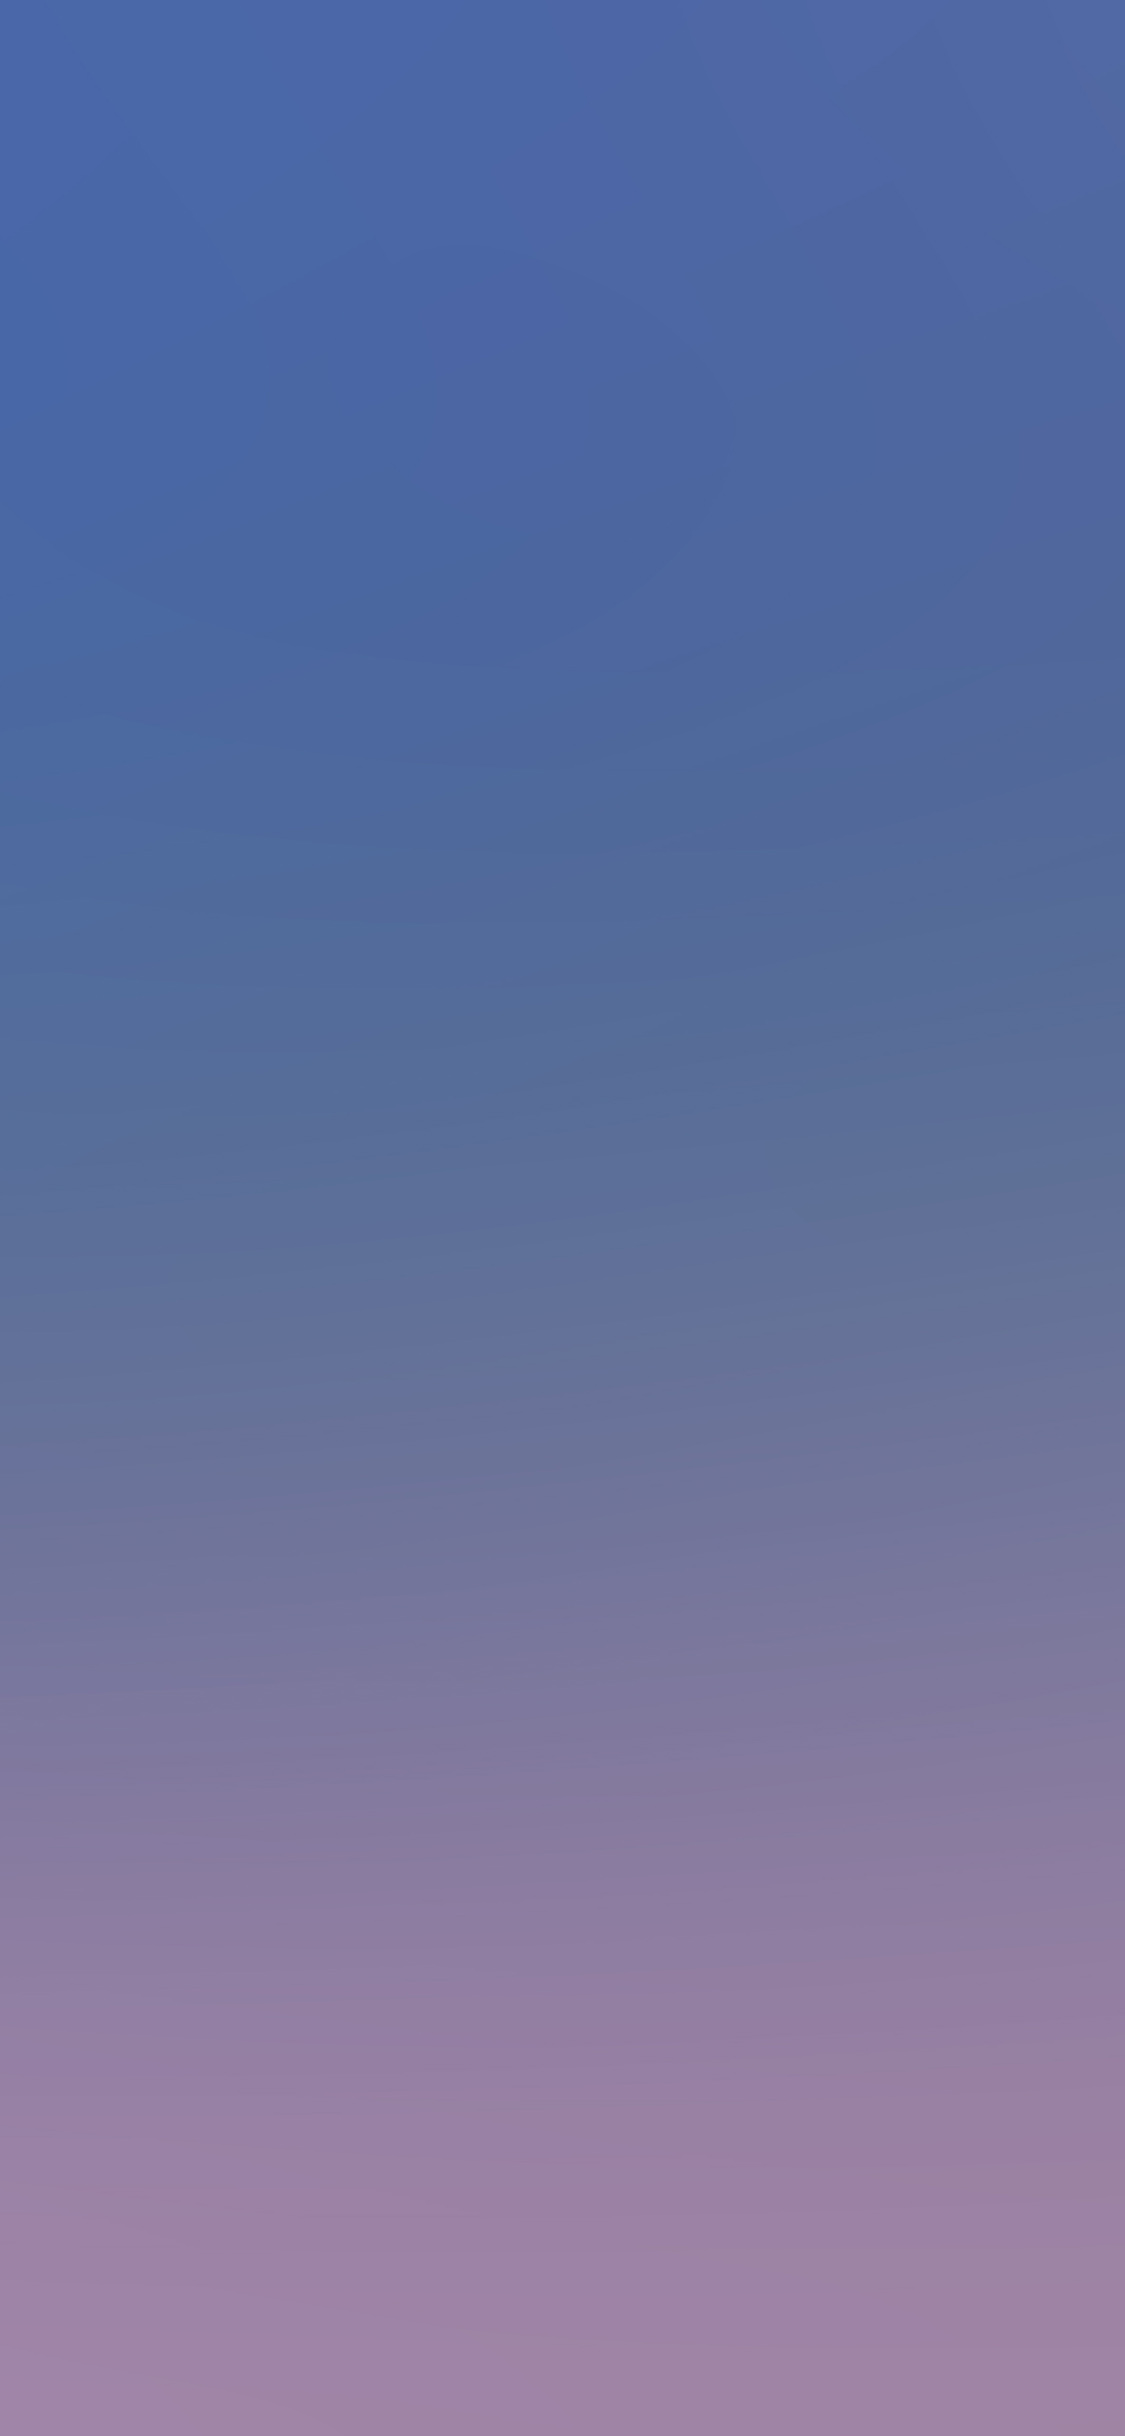 iPhone X wallpaper. blue purple soft light gradation blur